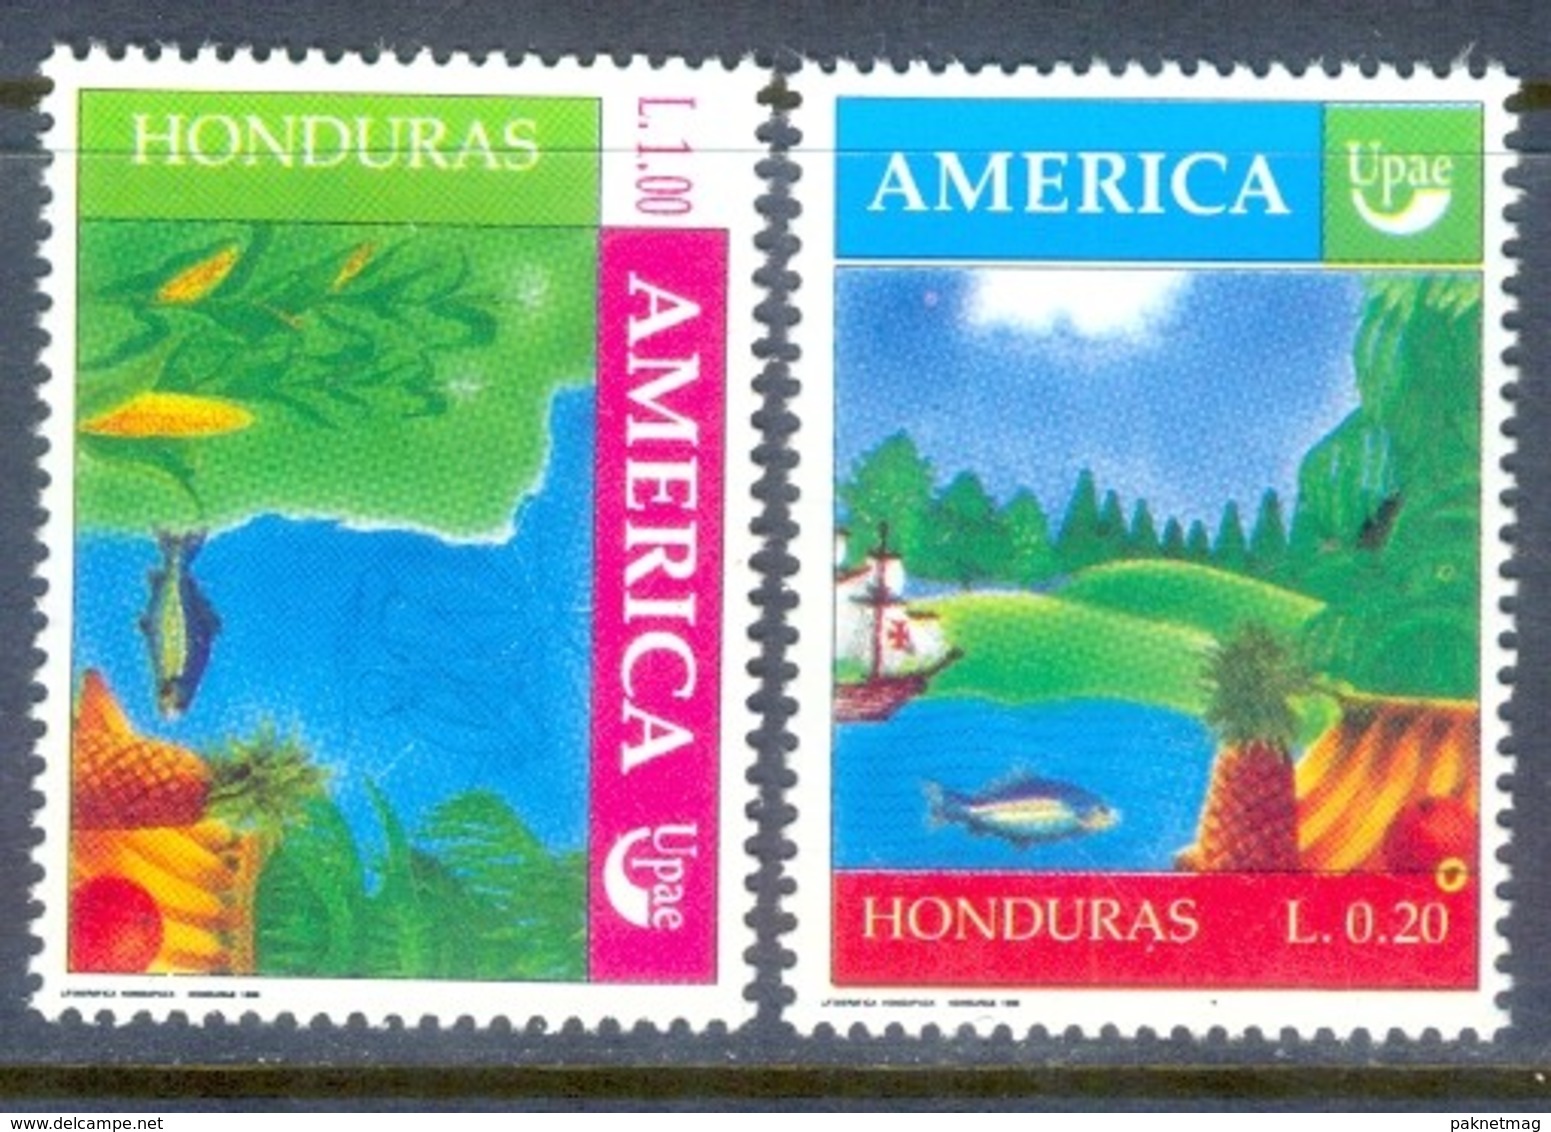 D62- Honduras, Stamp AMERICA UPAE 1990, Corn, Fish, Fruits, Par. - Fishes